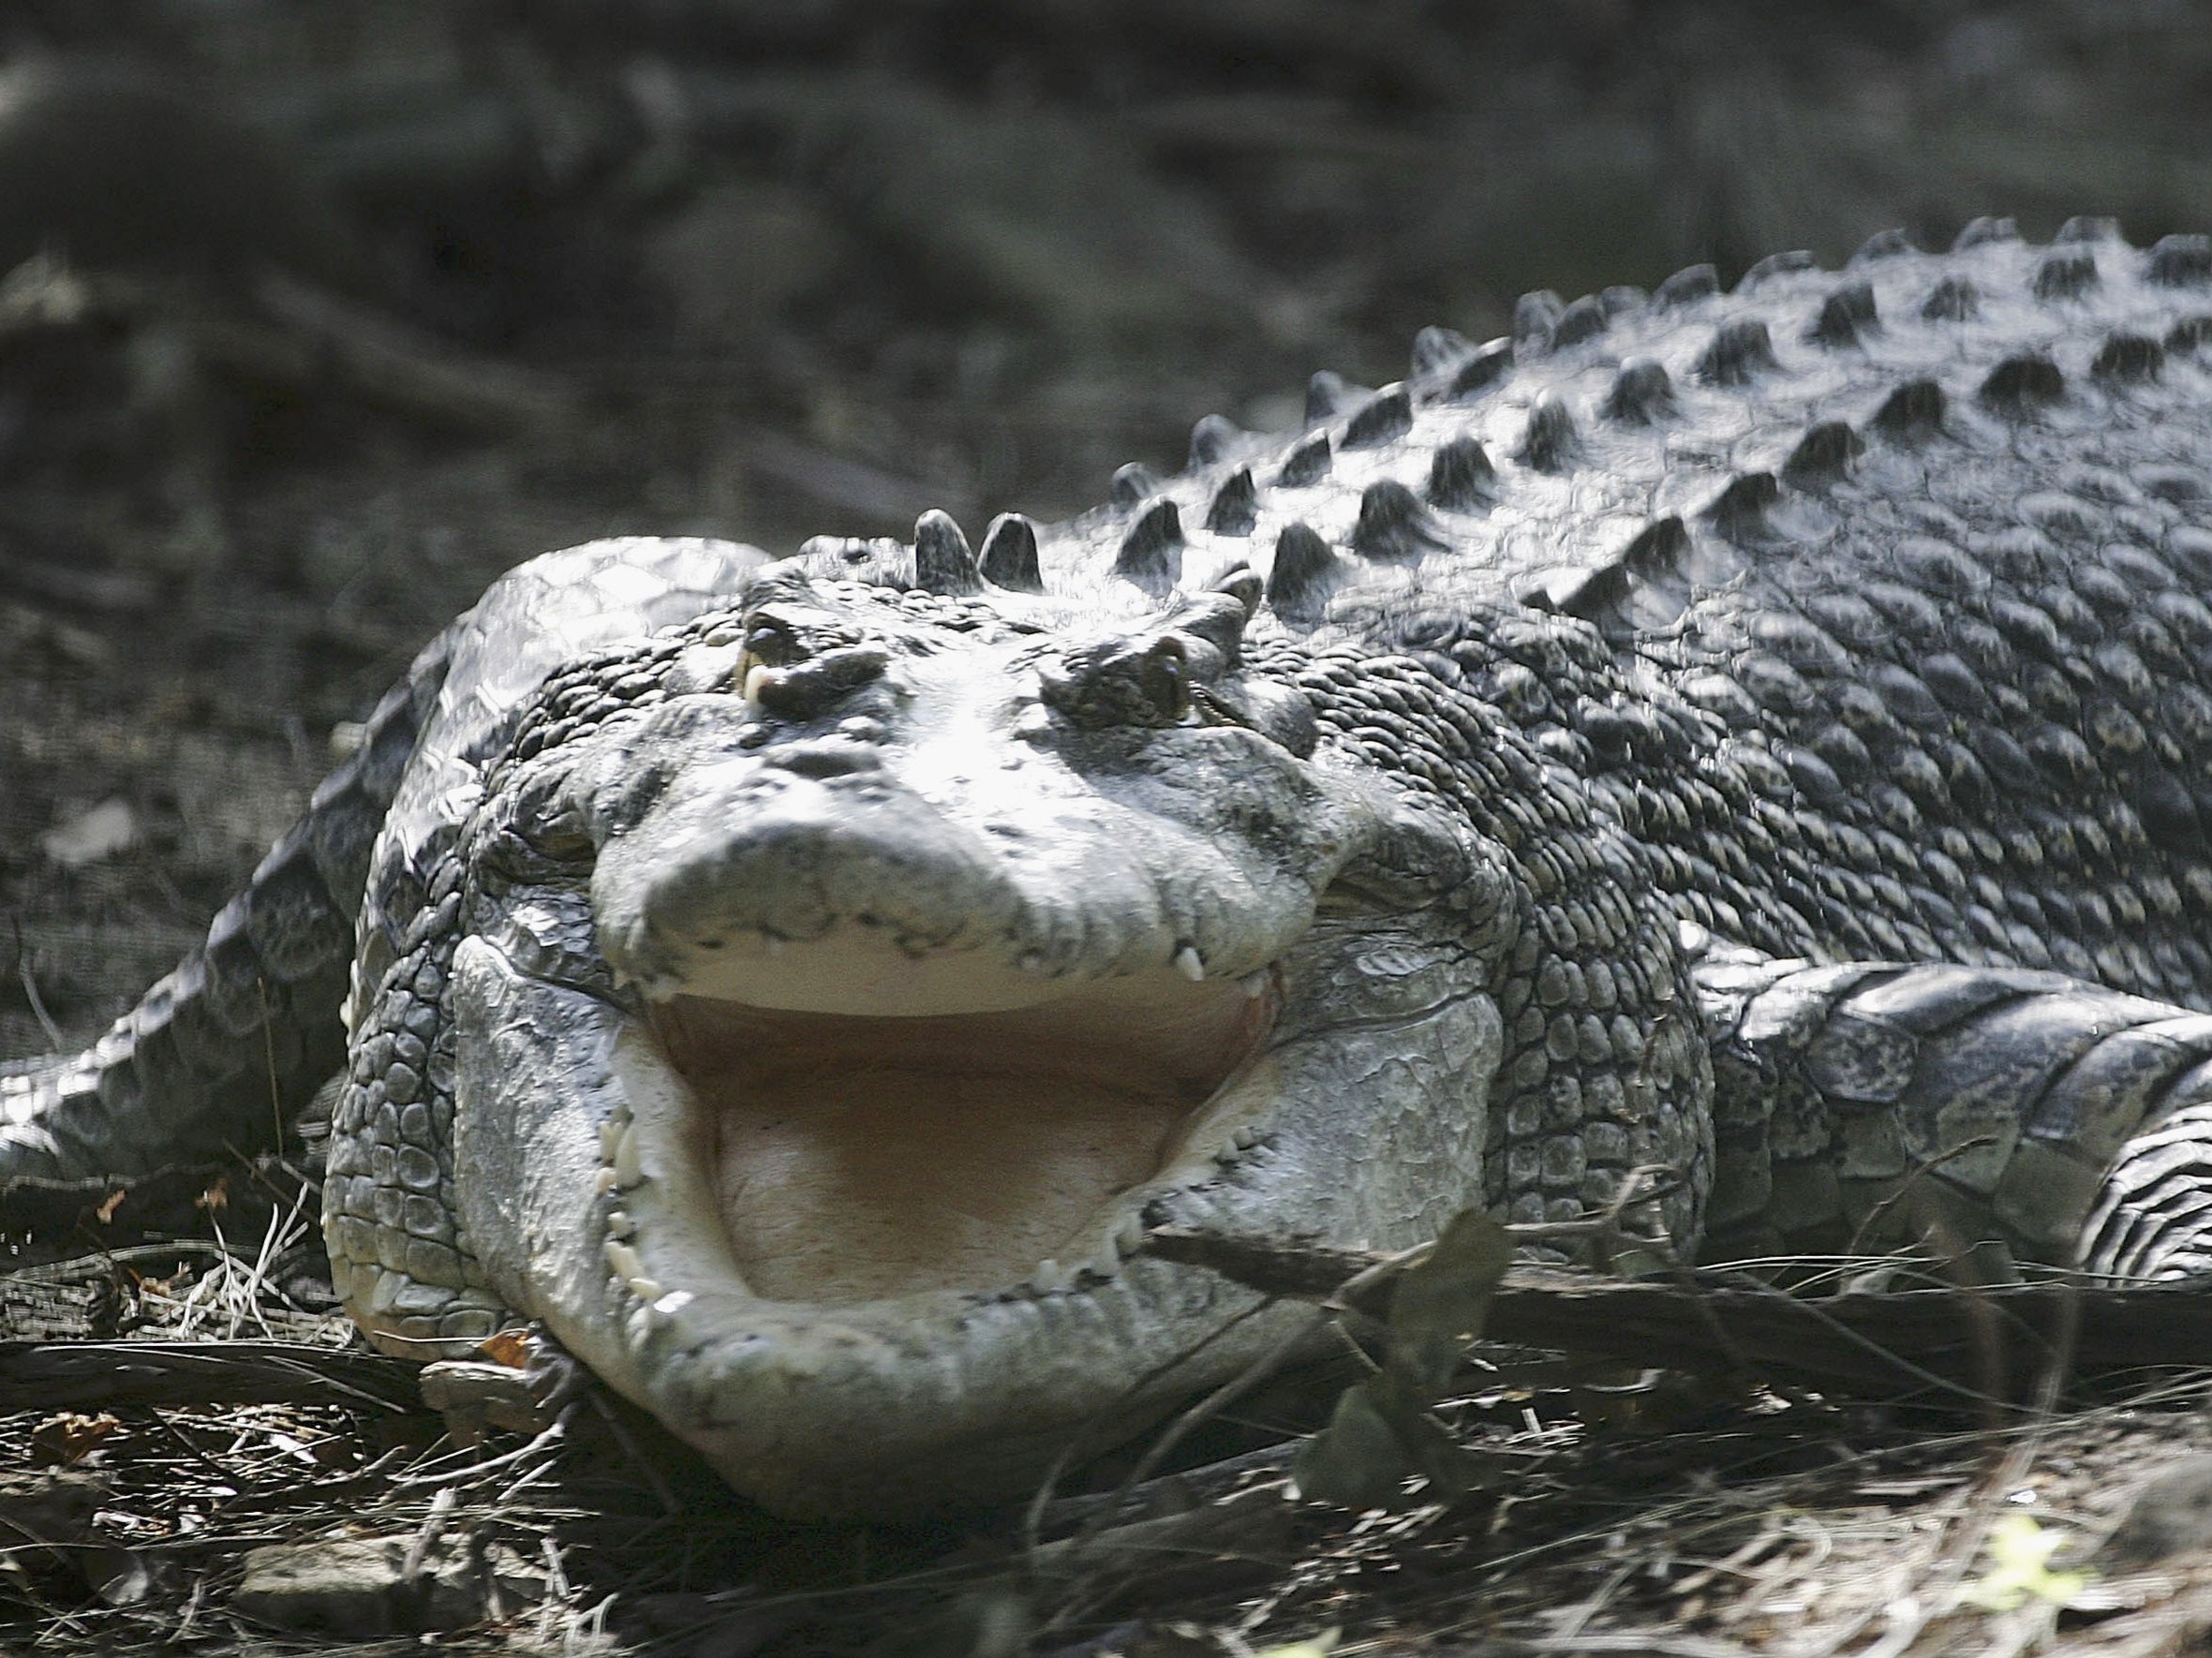 Saltwater crocodiles are Australia’s most dangerous predator